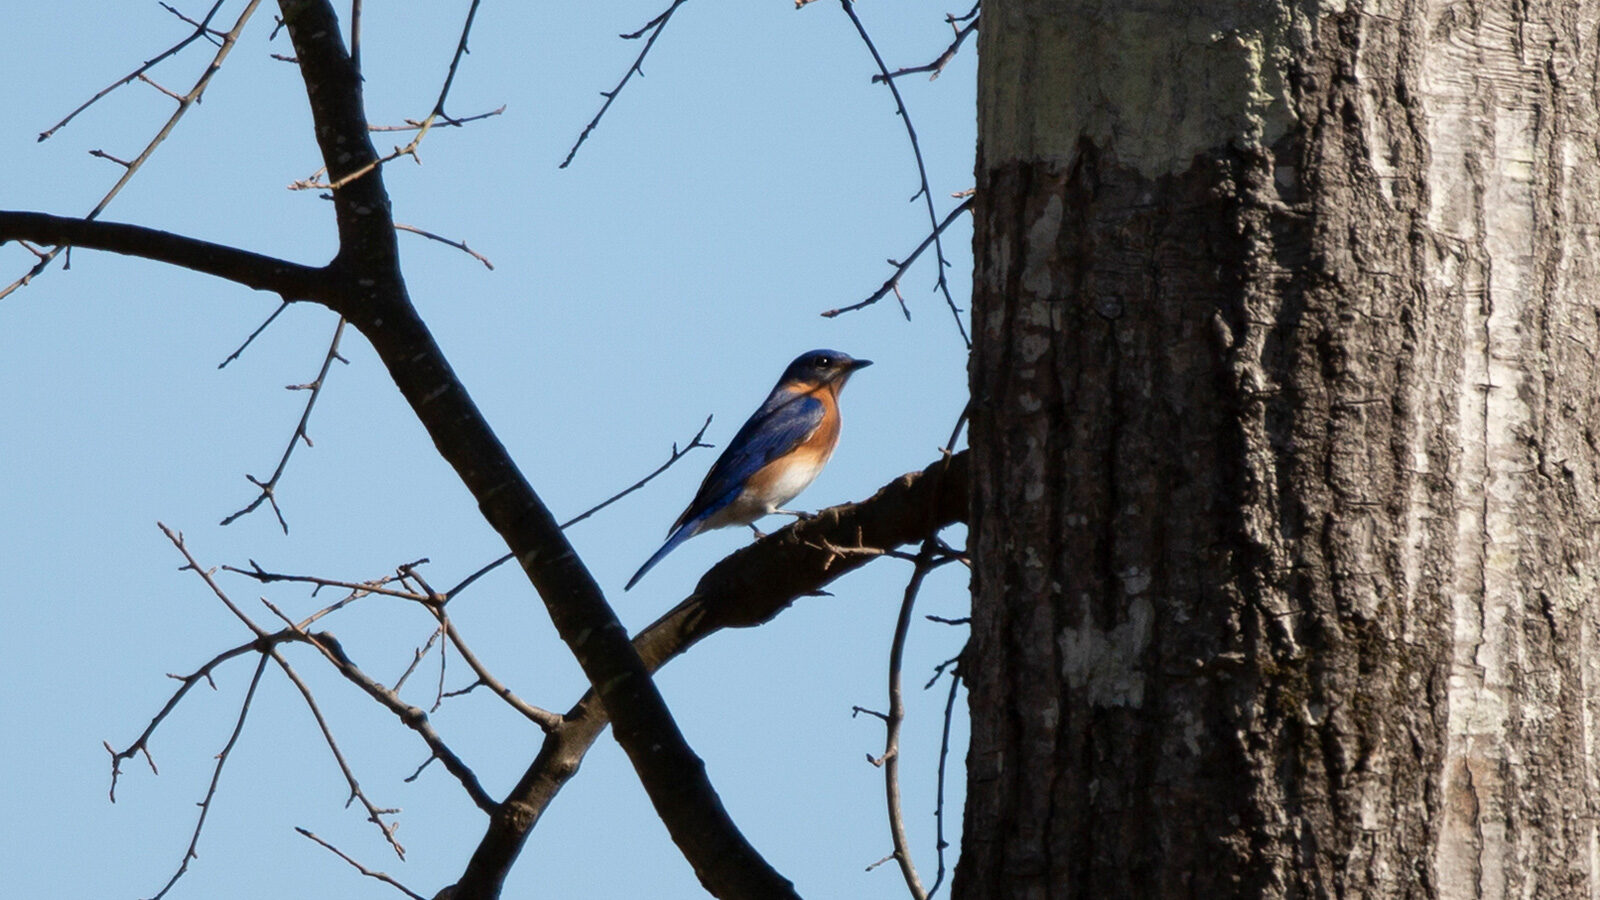 Eastern bluebird standing on a branch